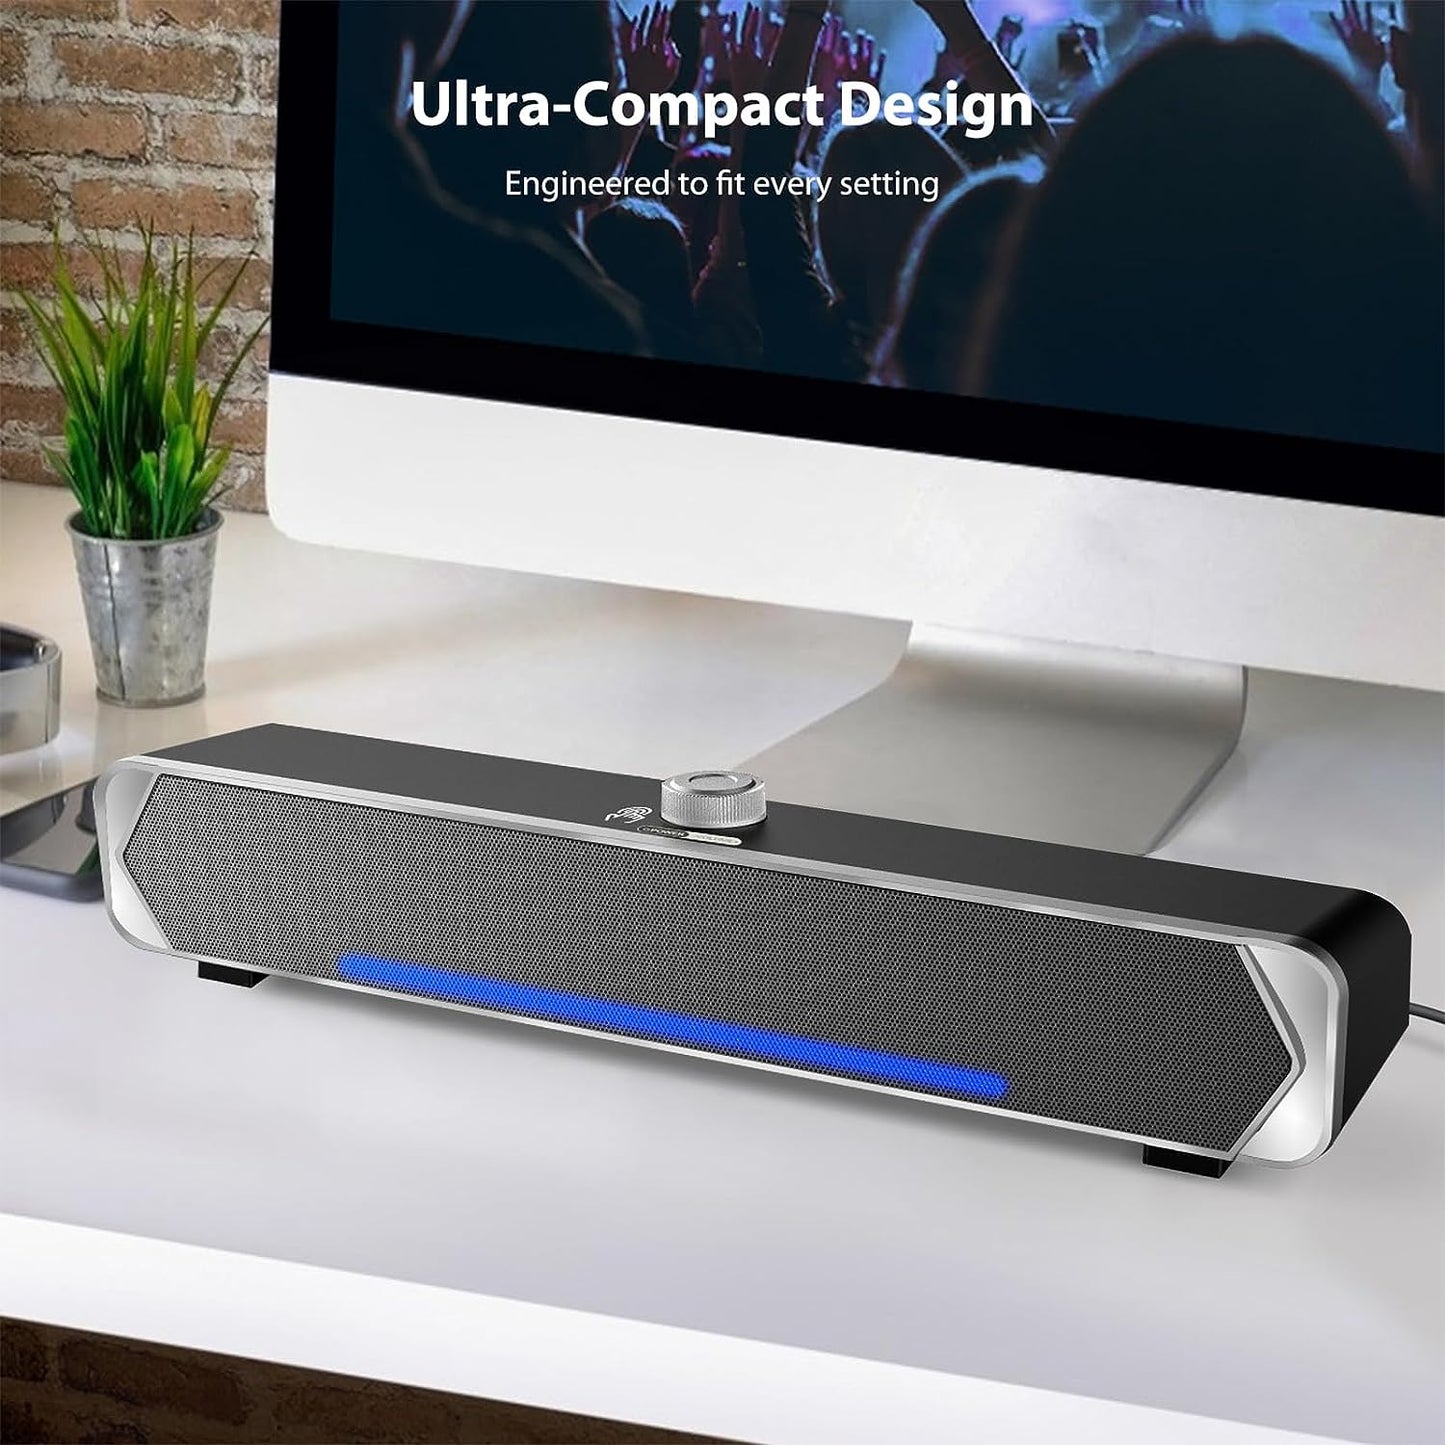 Desktop Monitor Computer Speakers: Bluetooth Soundbar with High-Fidelity Stereo Sound, USB-Powered Bar Speaker, Desktop Computers, Laptops